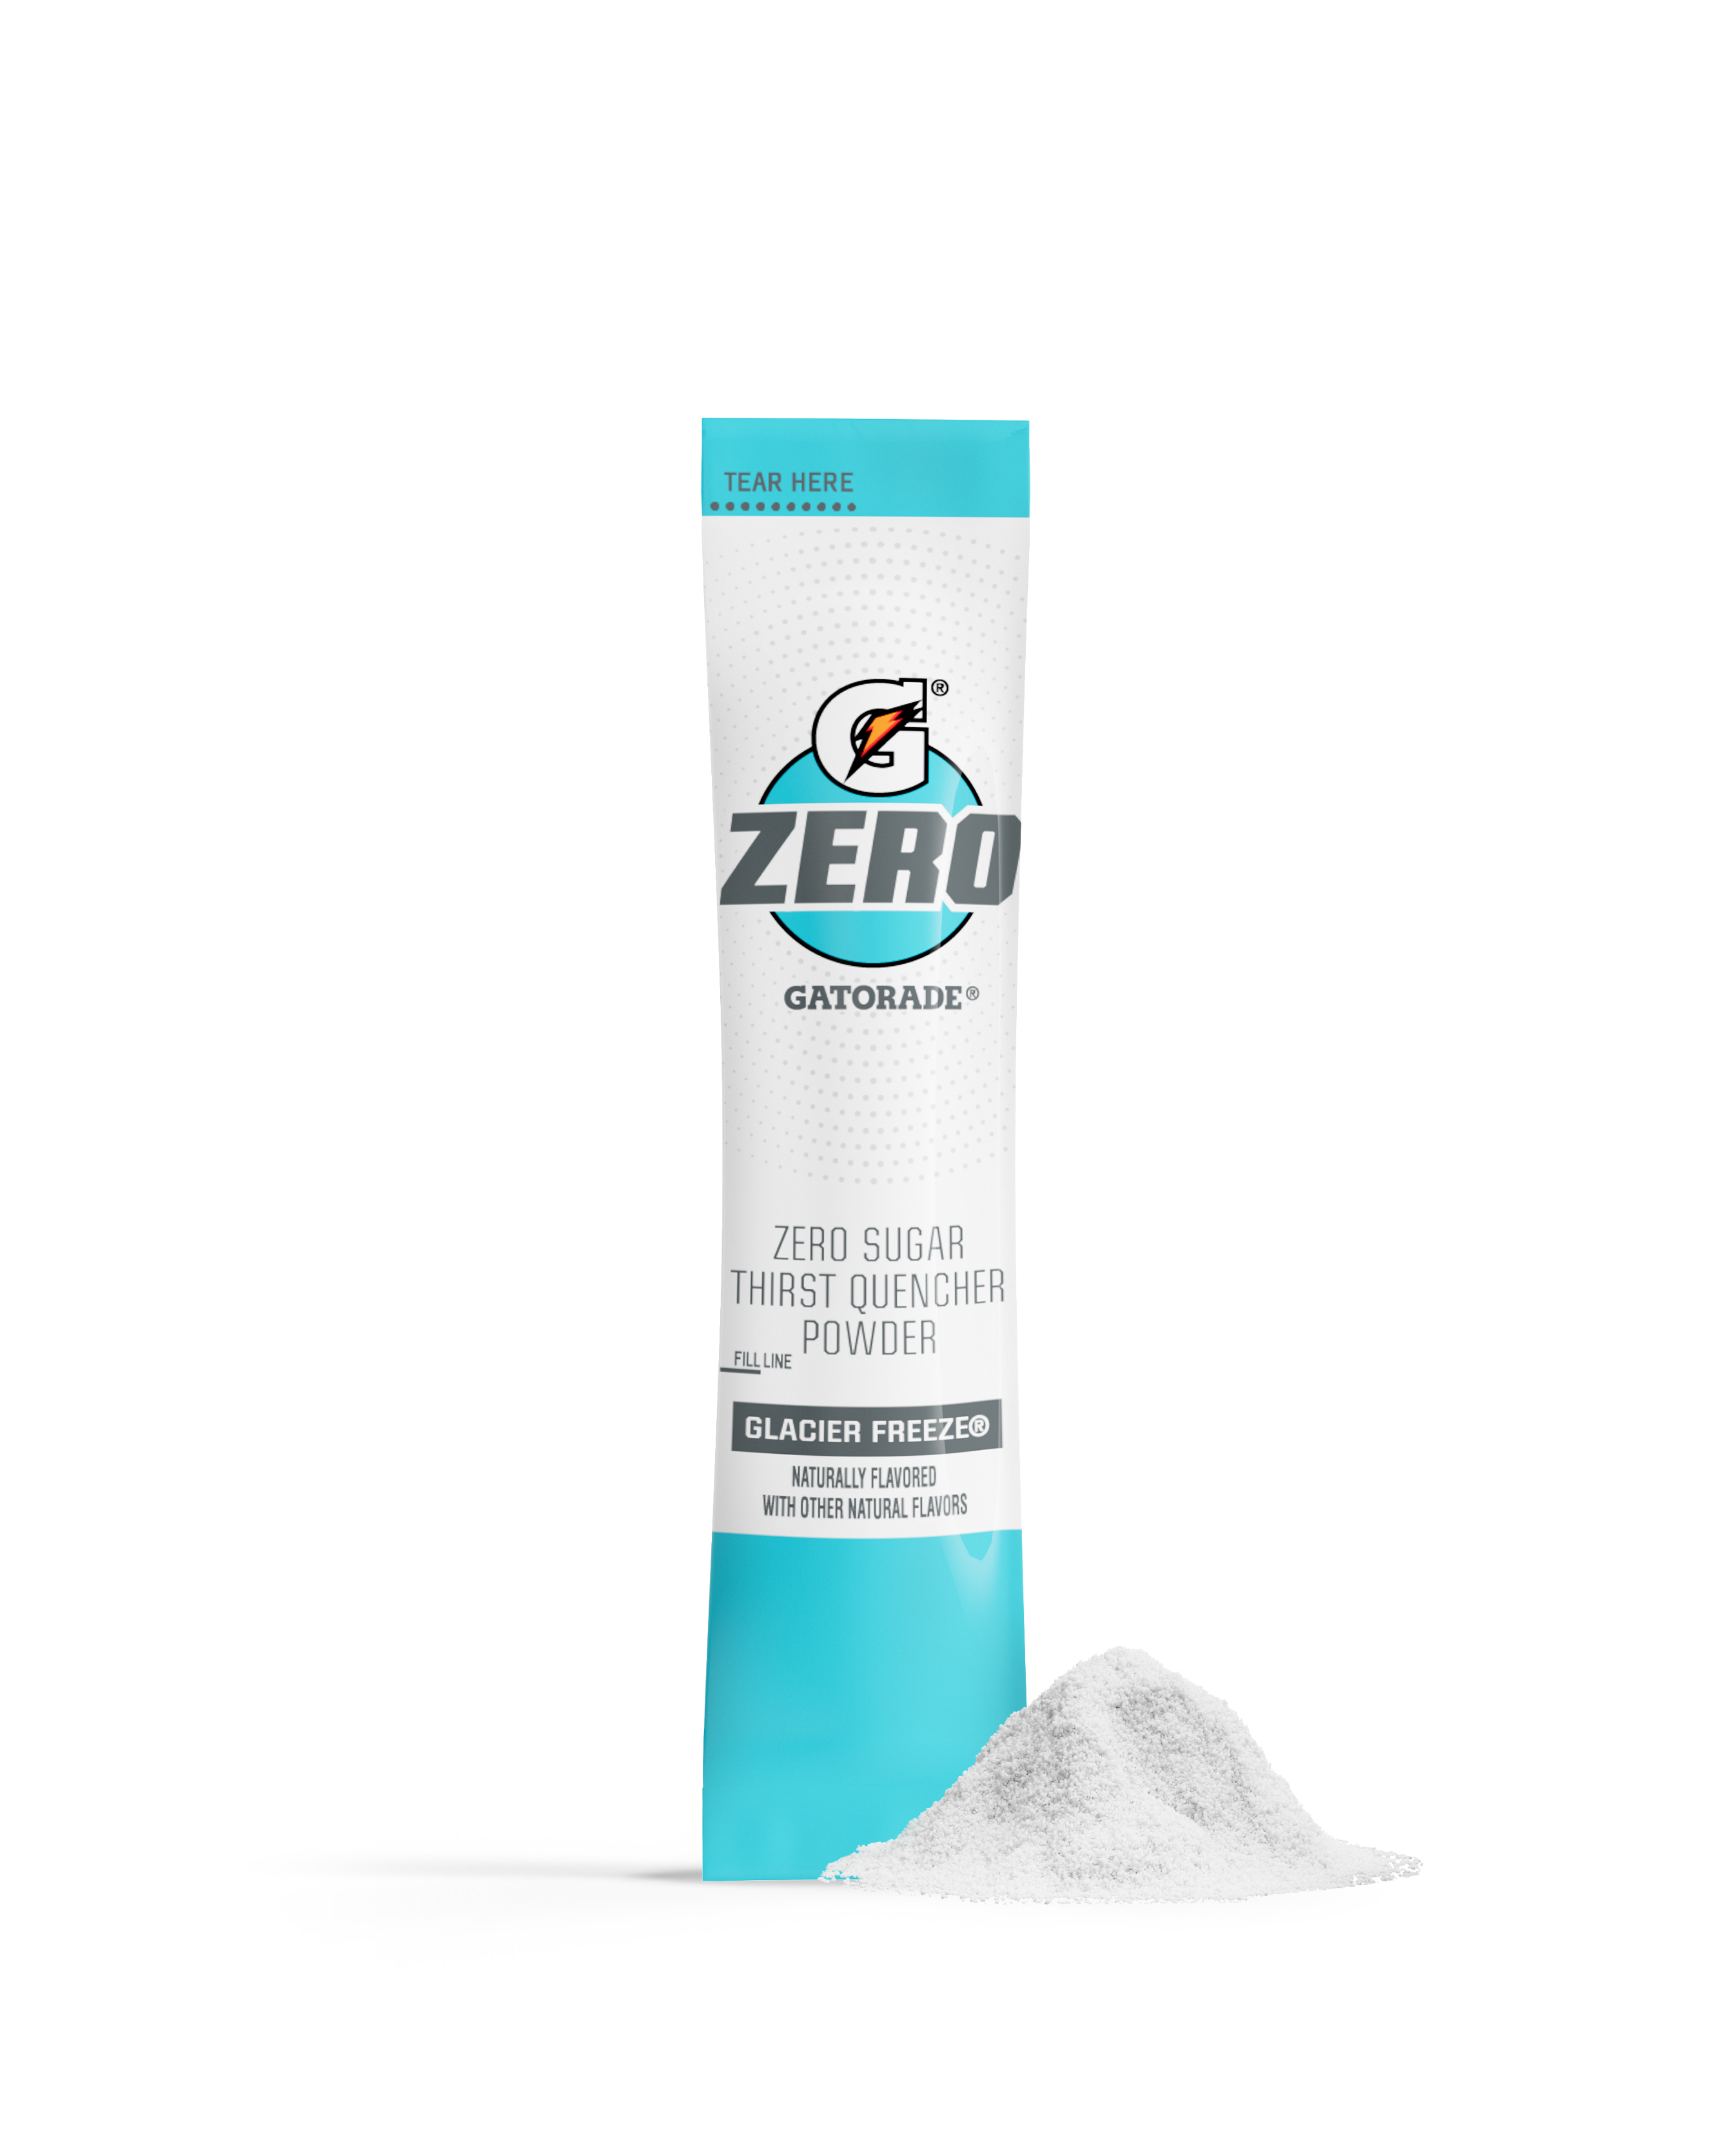 Gatorade zero glacier freeze single serve powder